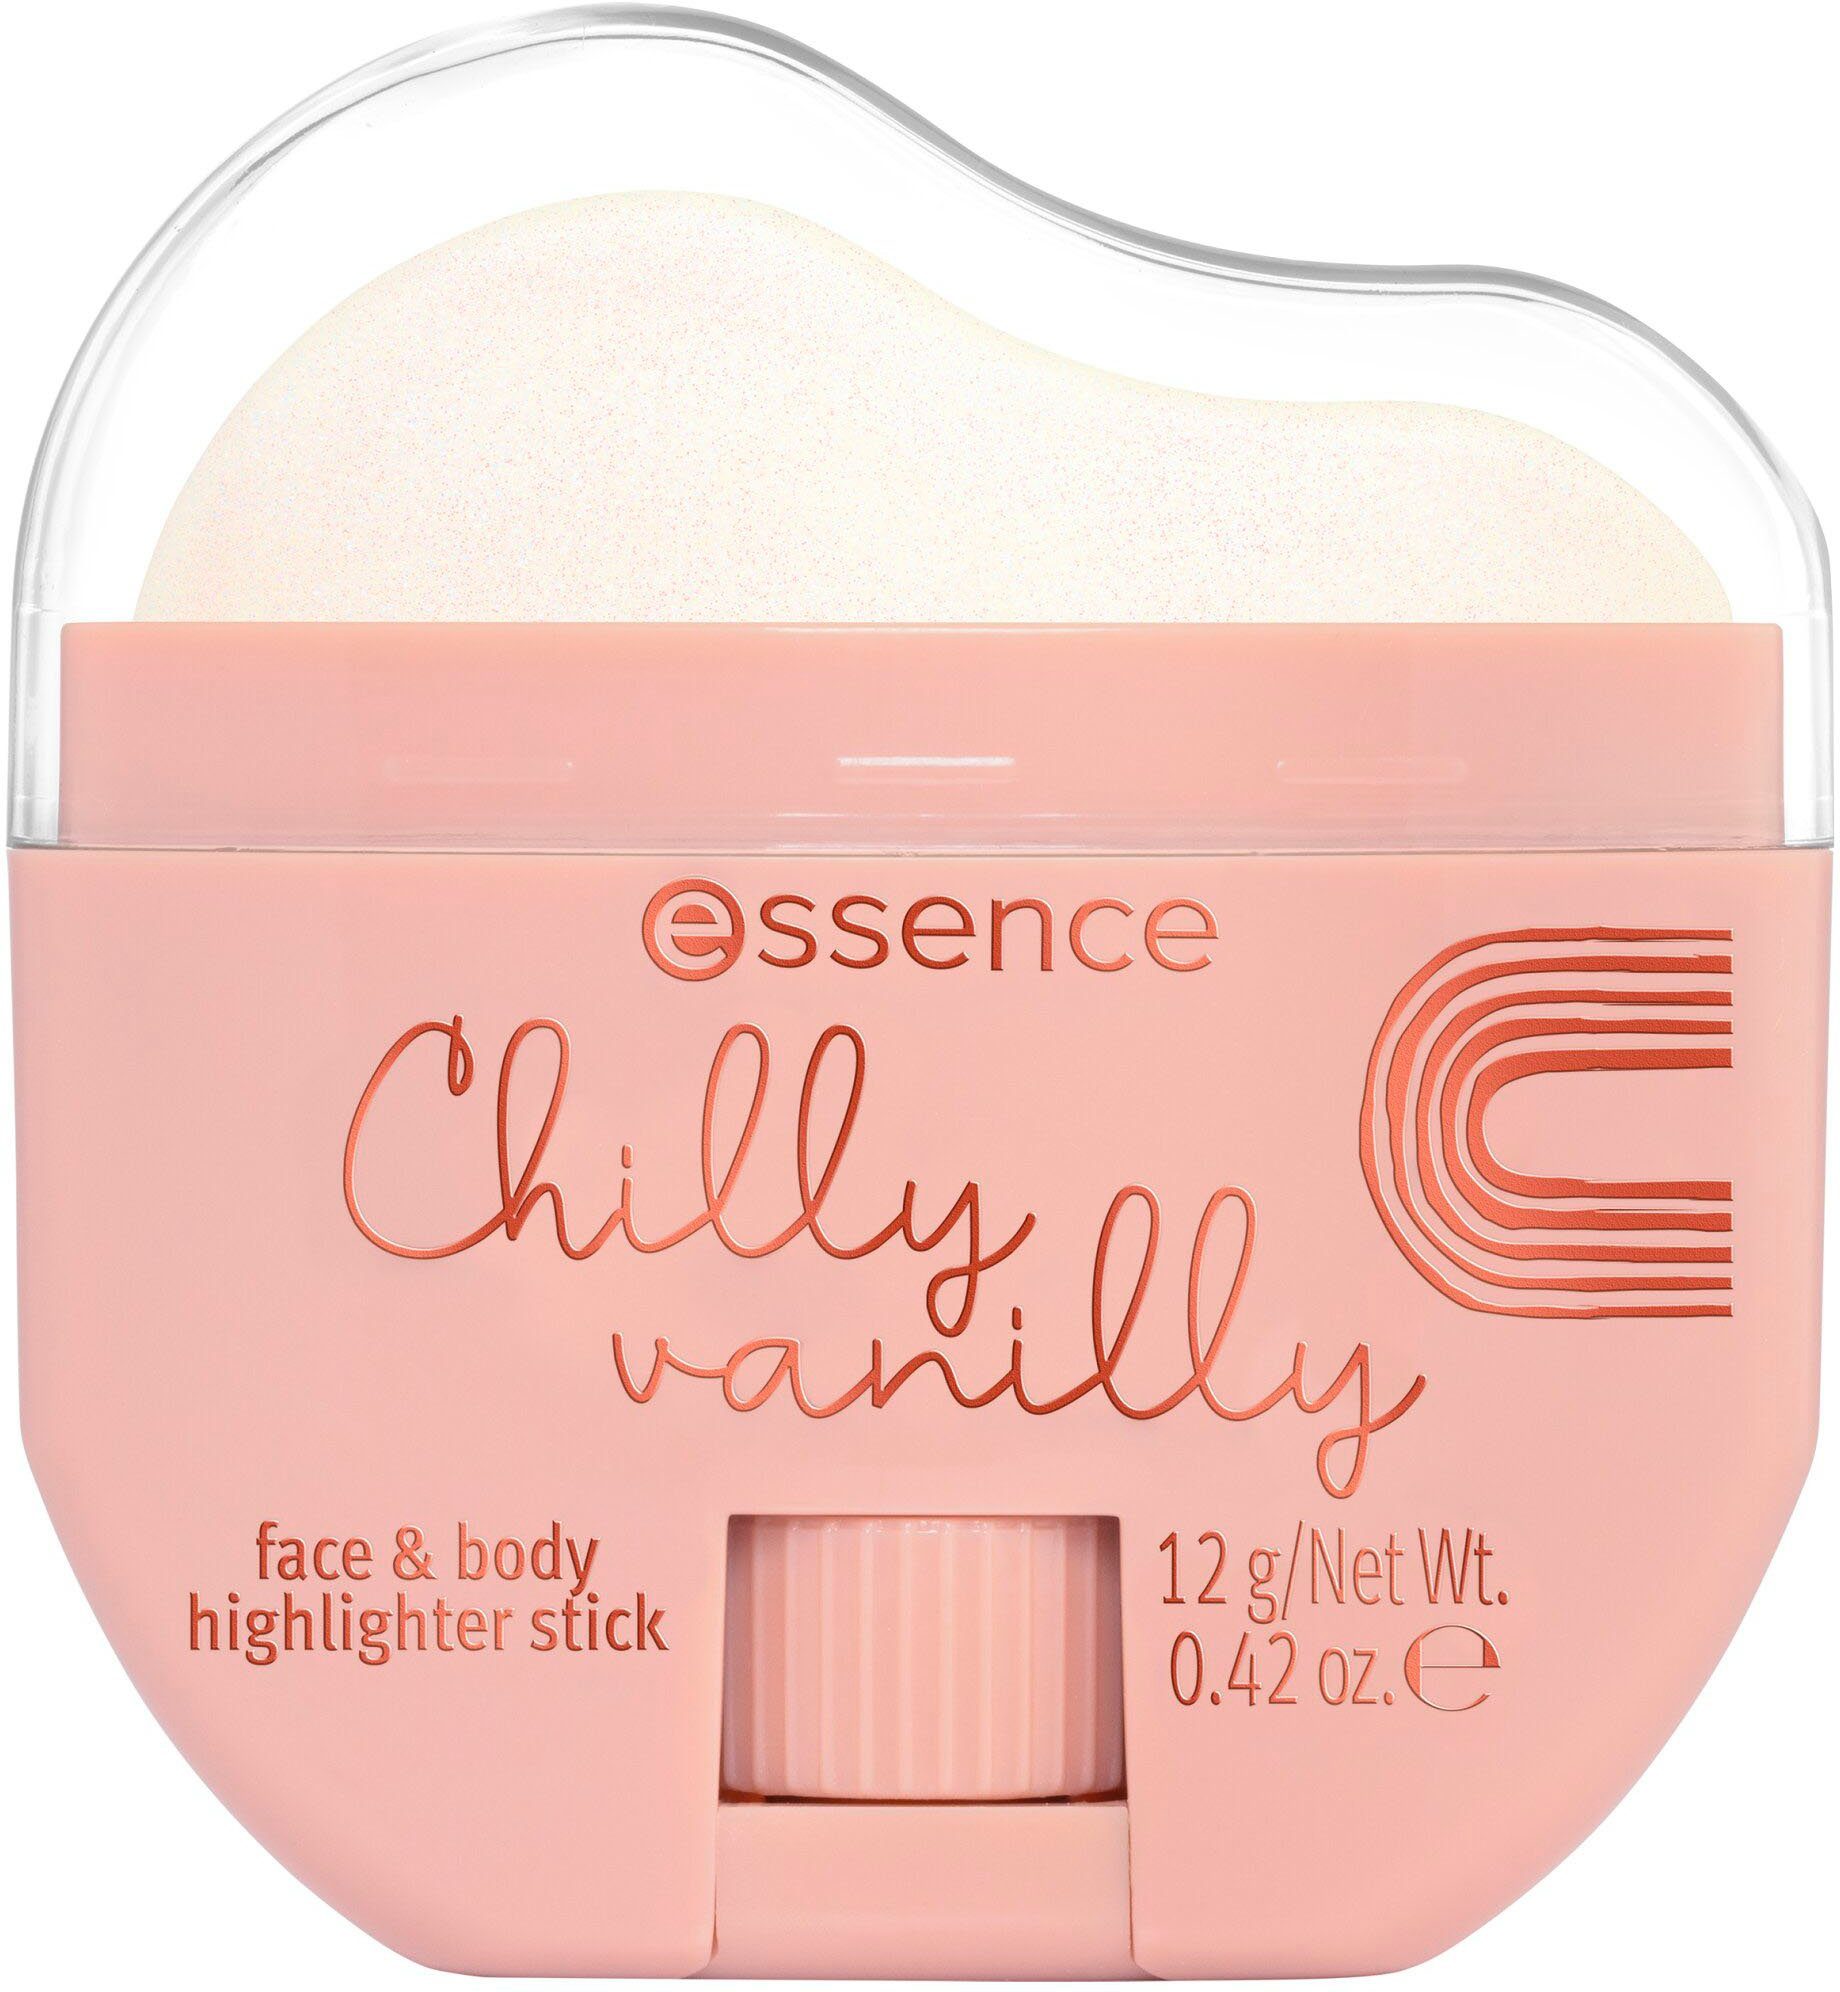 Essence Highlighter Chilly vanilly face & body highlighter stick, 3-tlg.